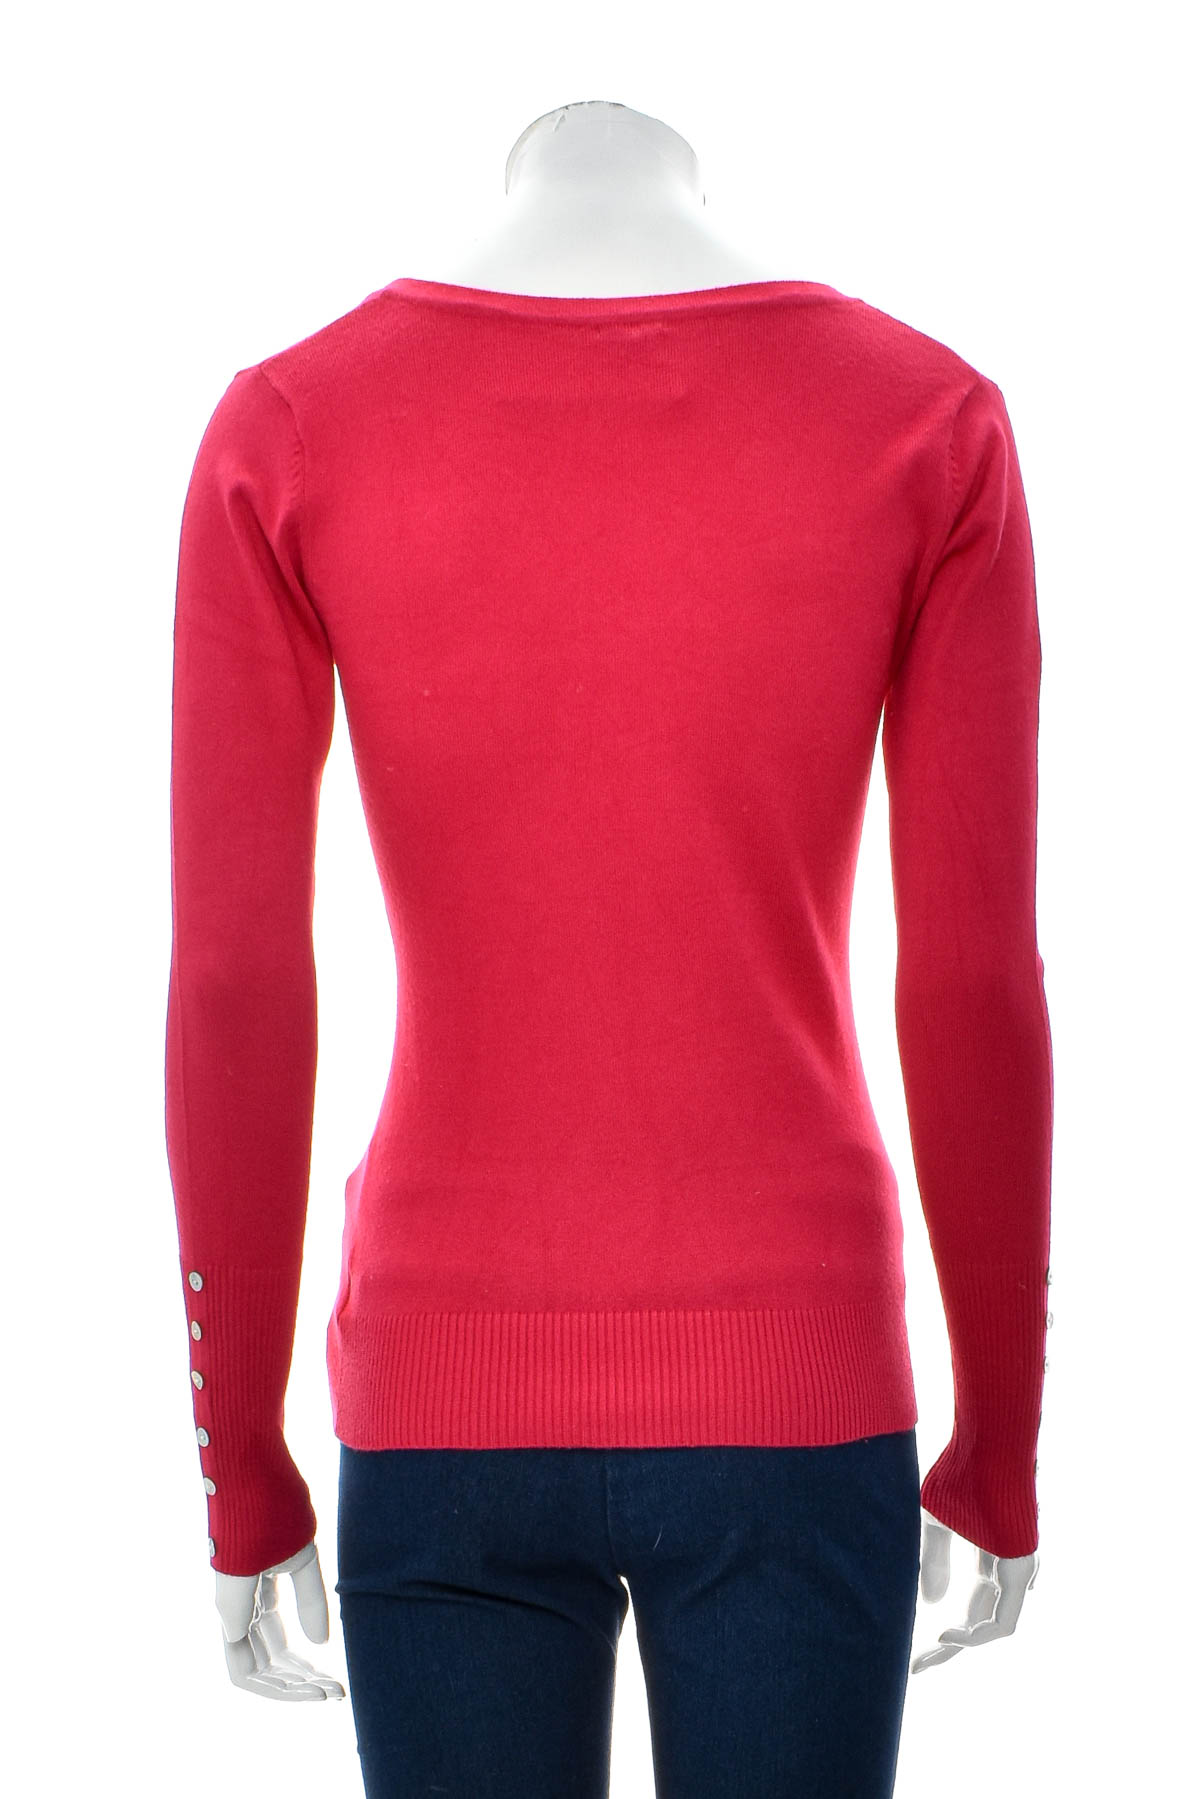 Women's sweater - Charlotte Russe - 1